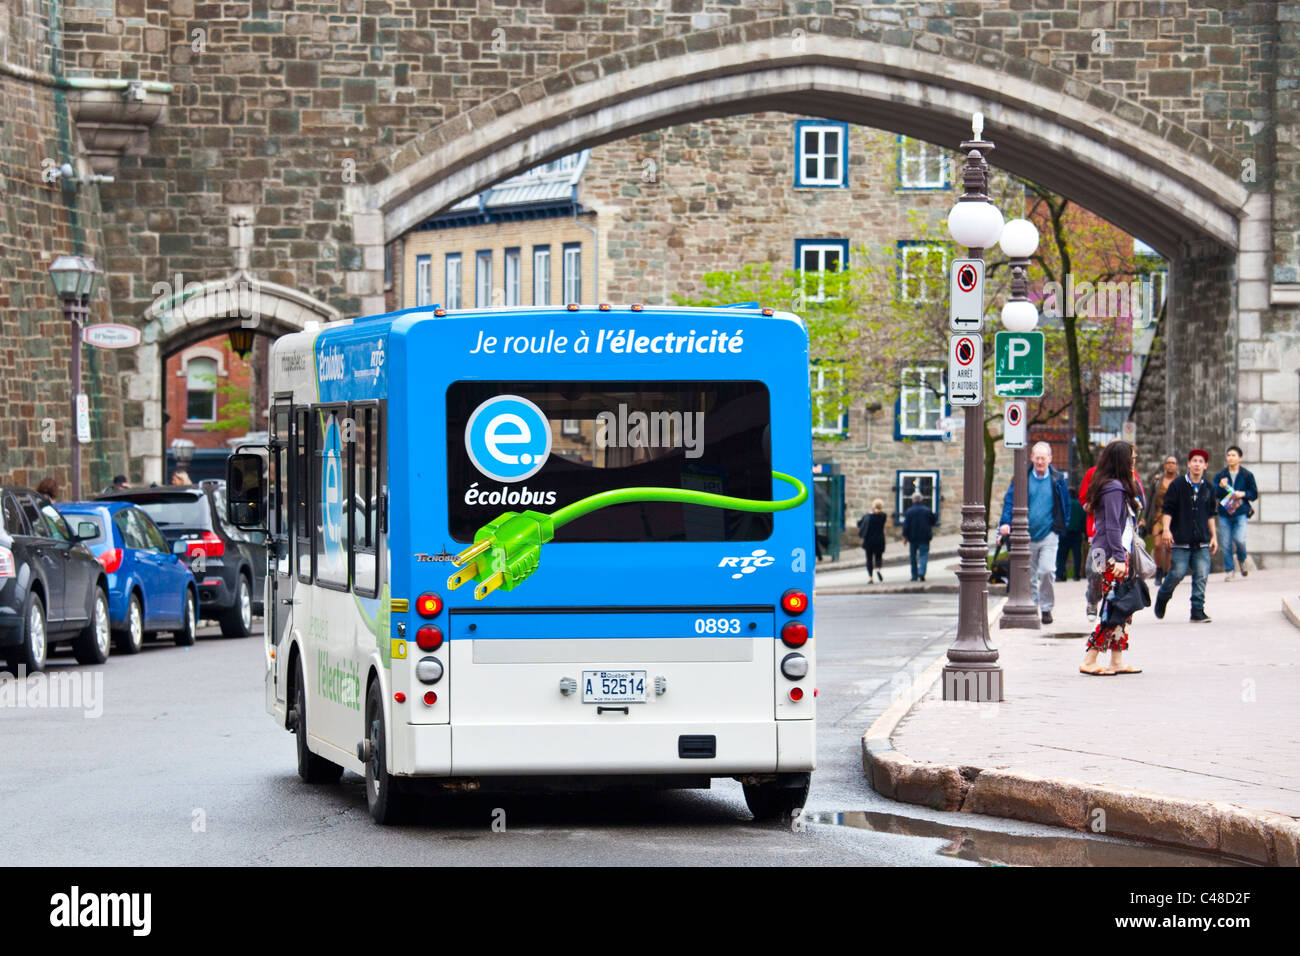 Electric public transit bus, Porte St Jean, old town, Quebec City, Canada Stock Photo